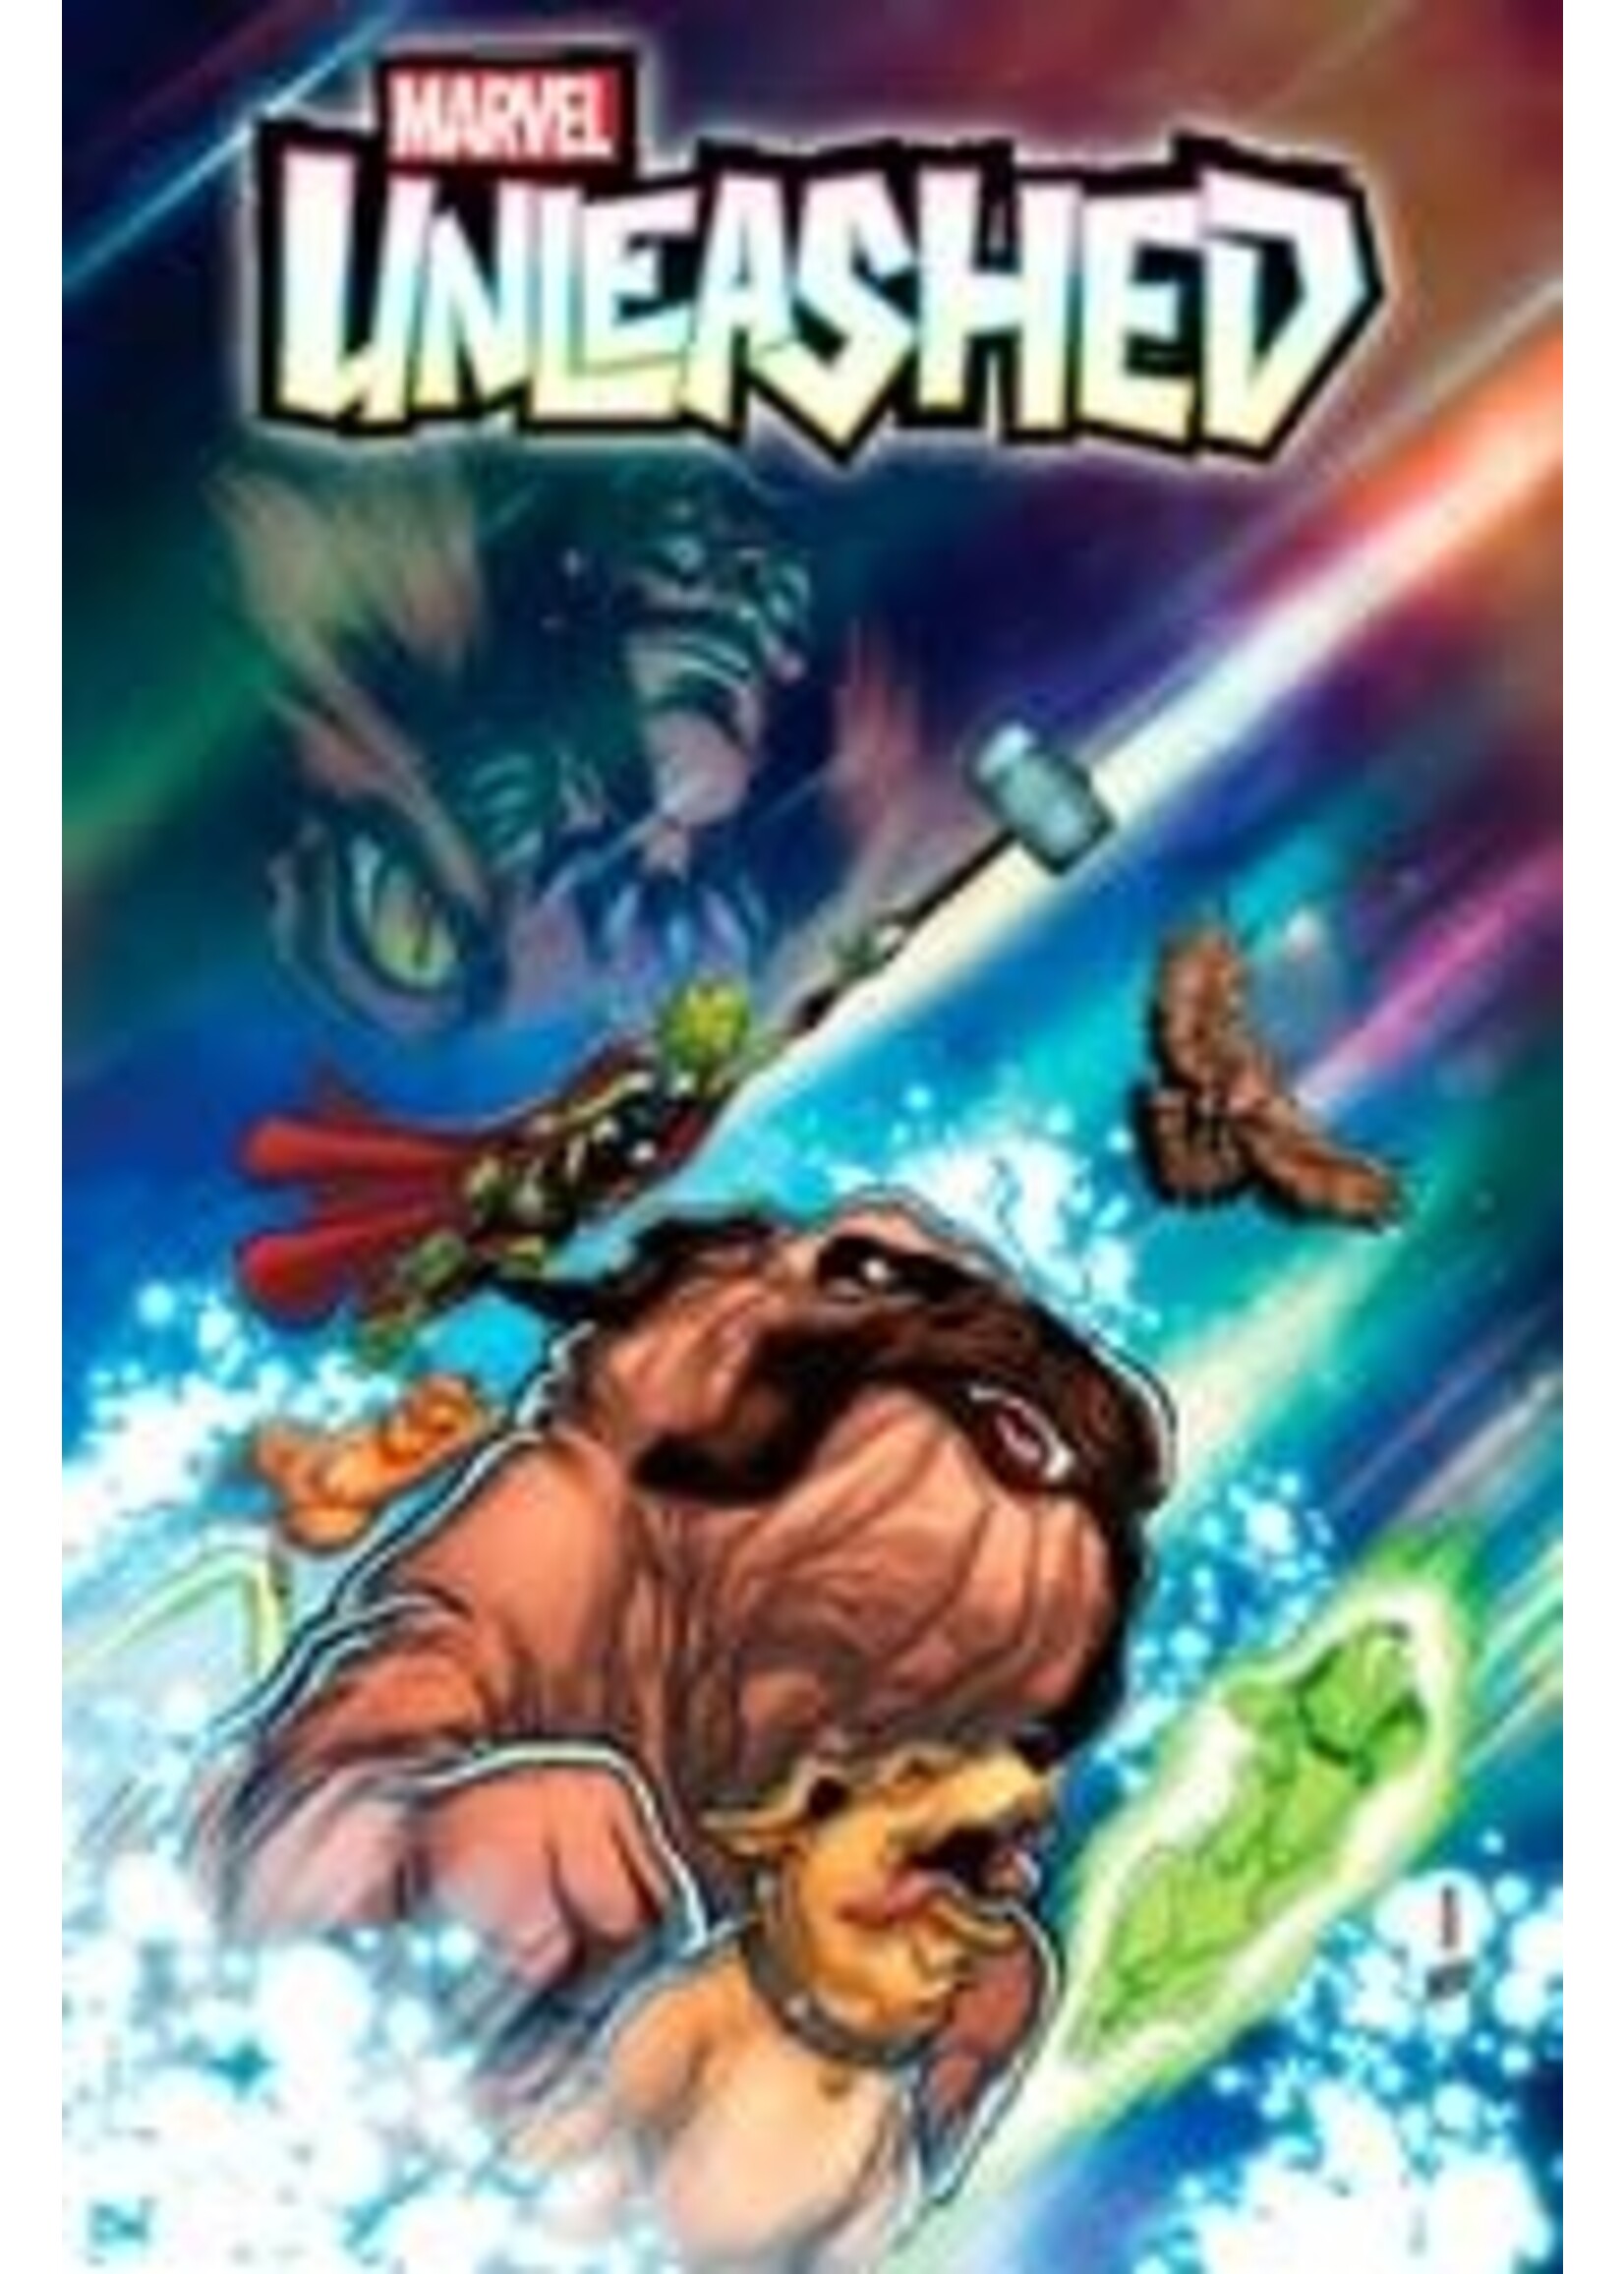 MARVEL COMICS MARVEL UNLEASHED complete 4 issue series